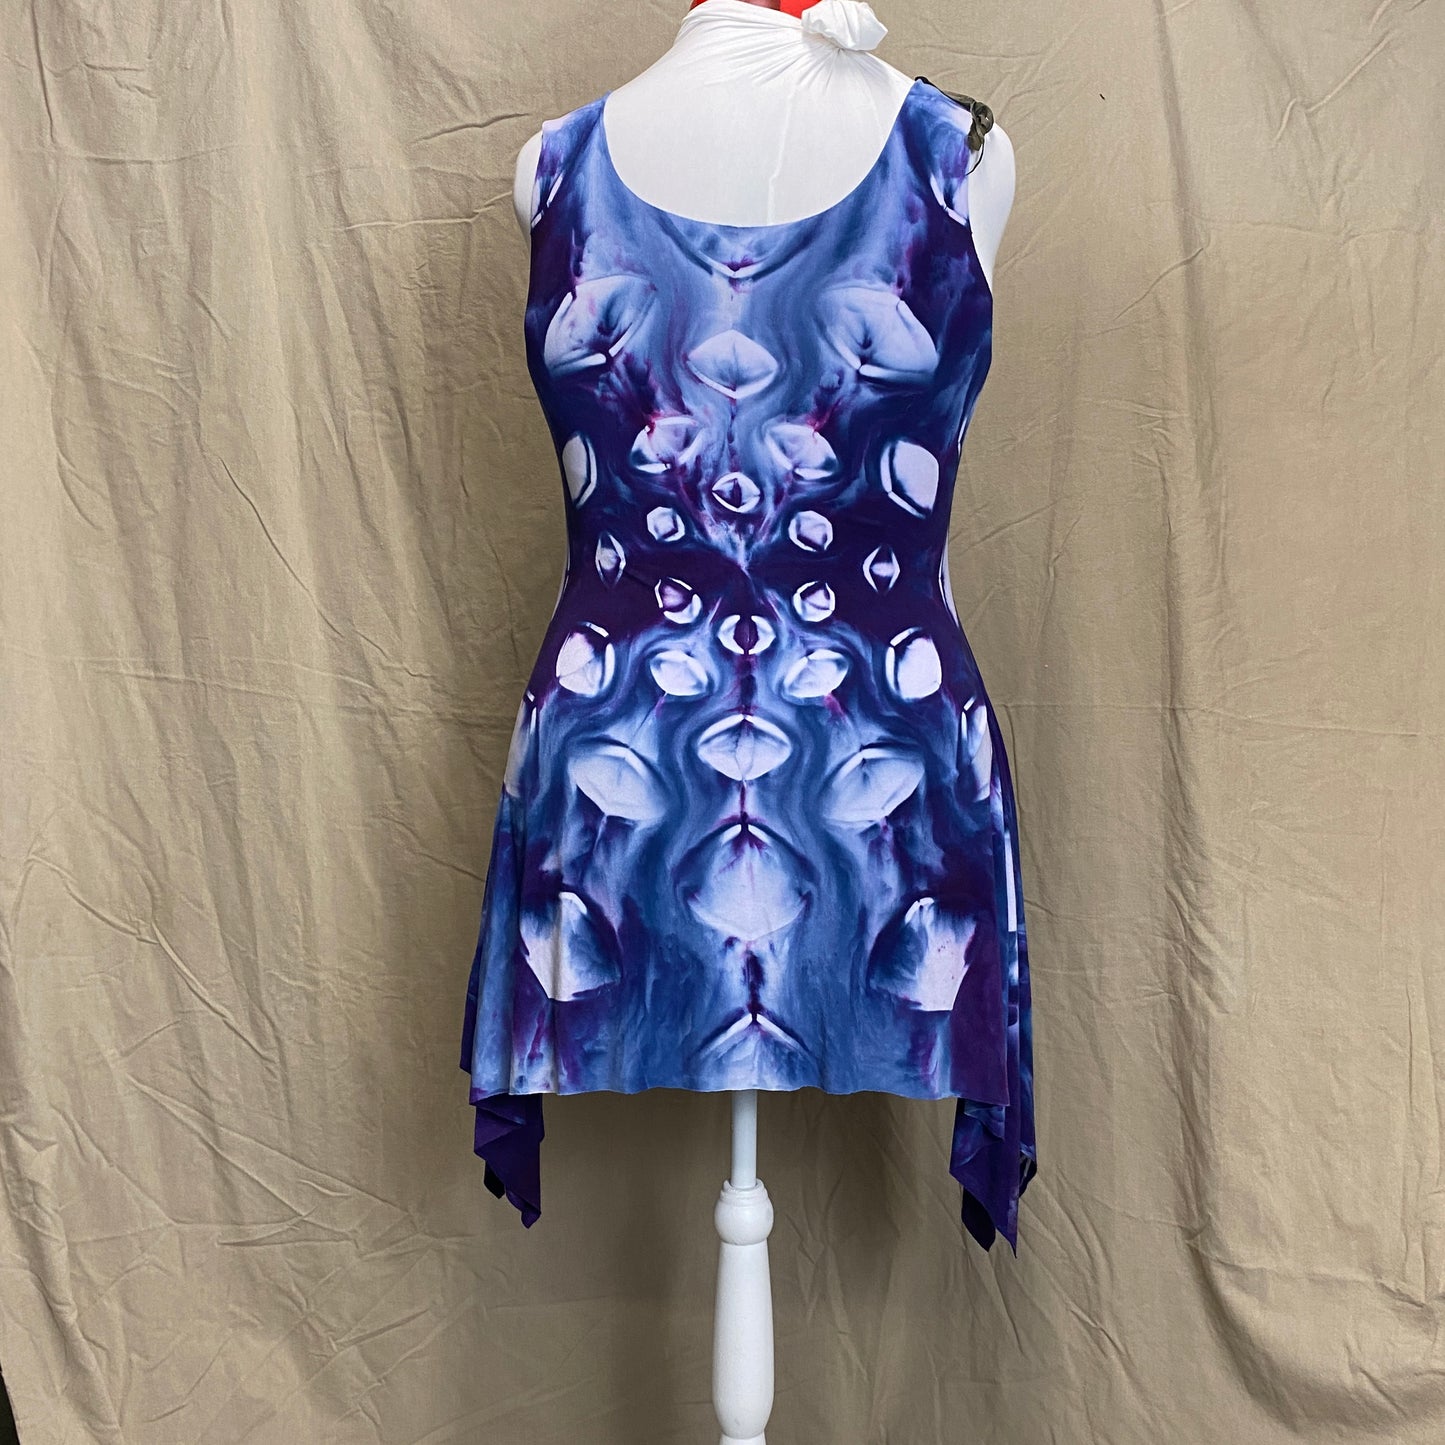 Melted Mandala Aquarius Dress in NightShade